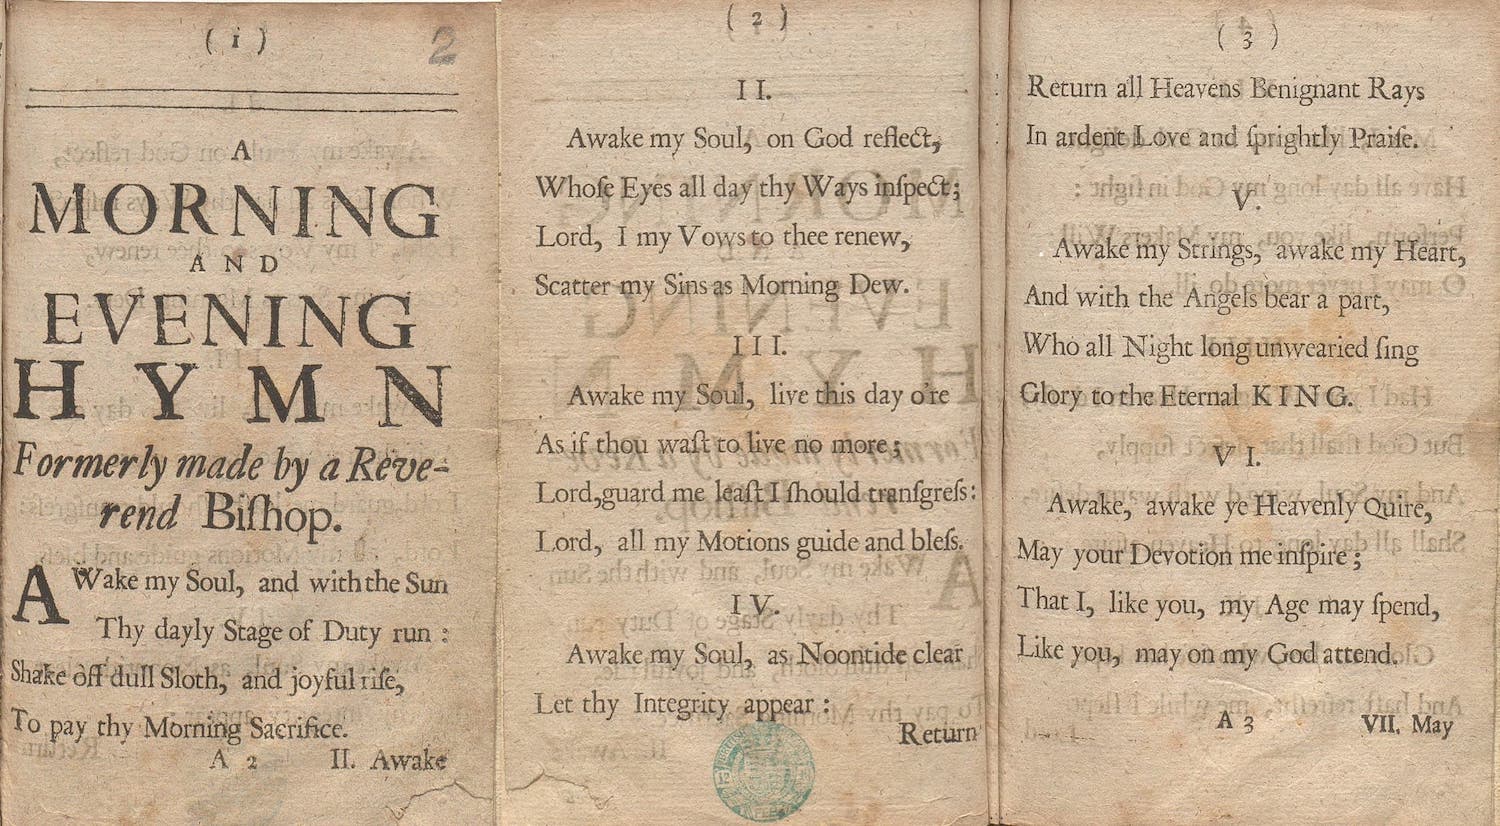 Image of A Morning Hymn from Thomas Ken's Manual